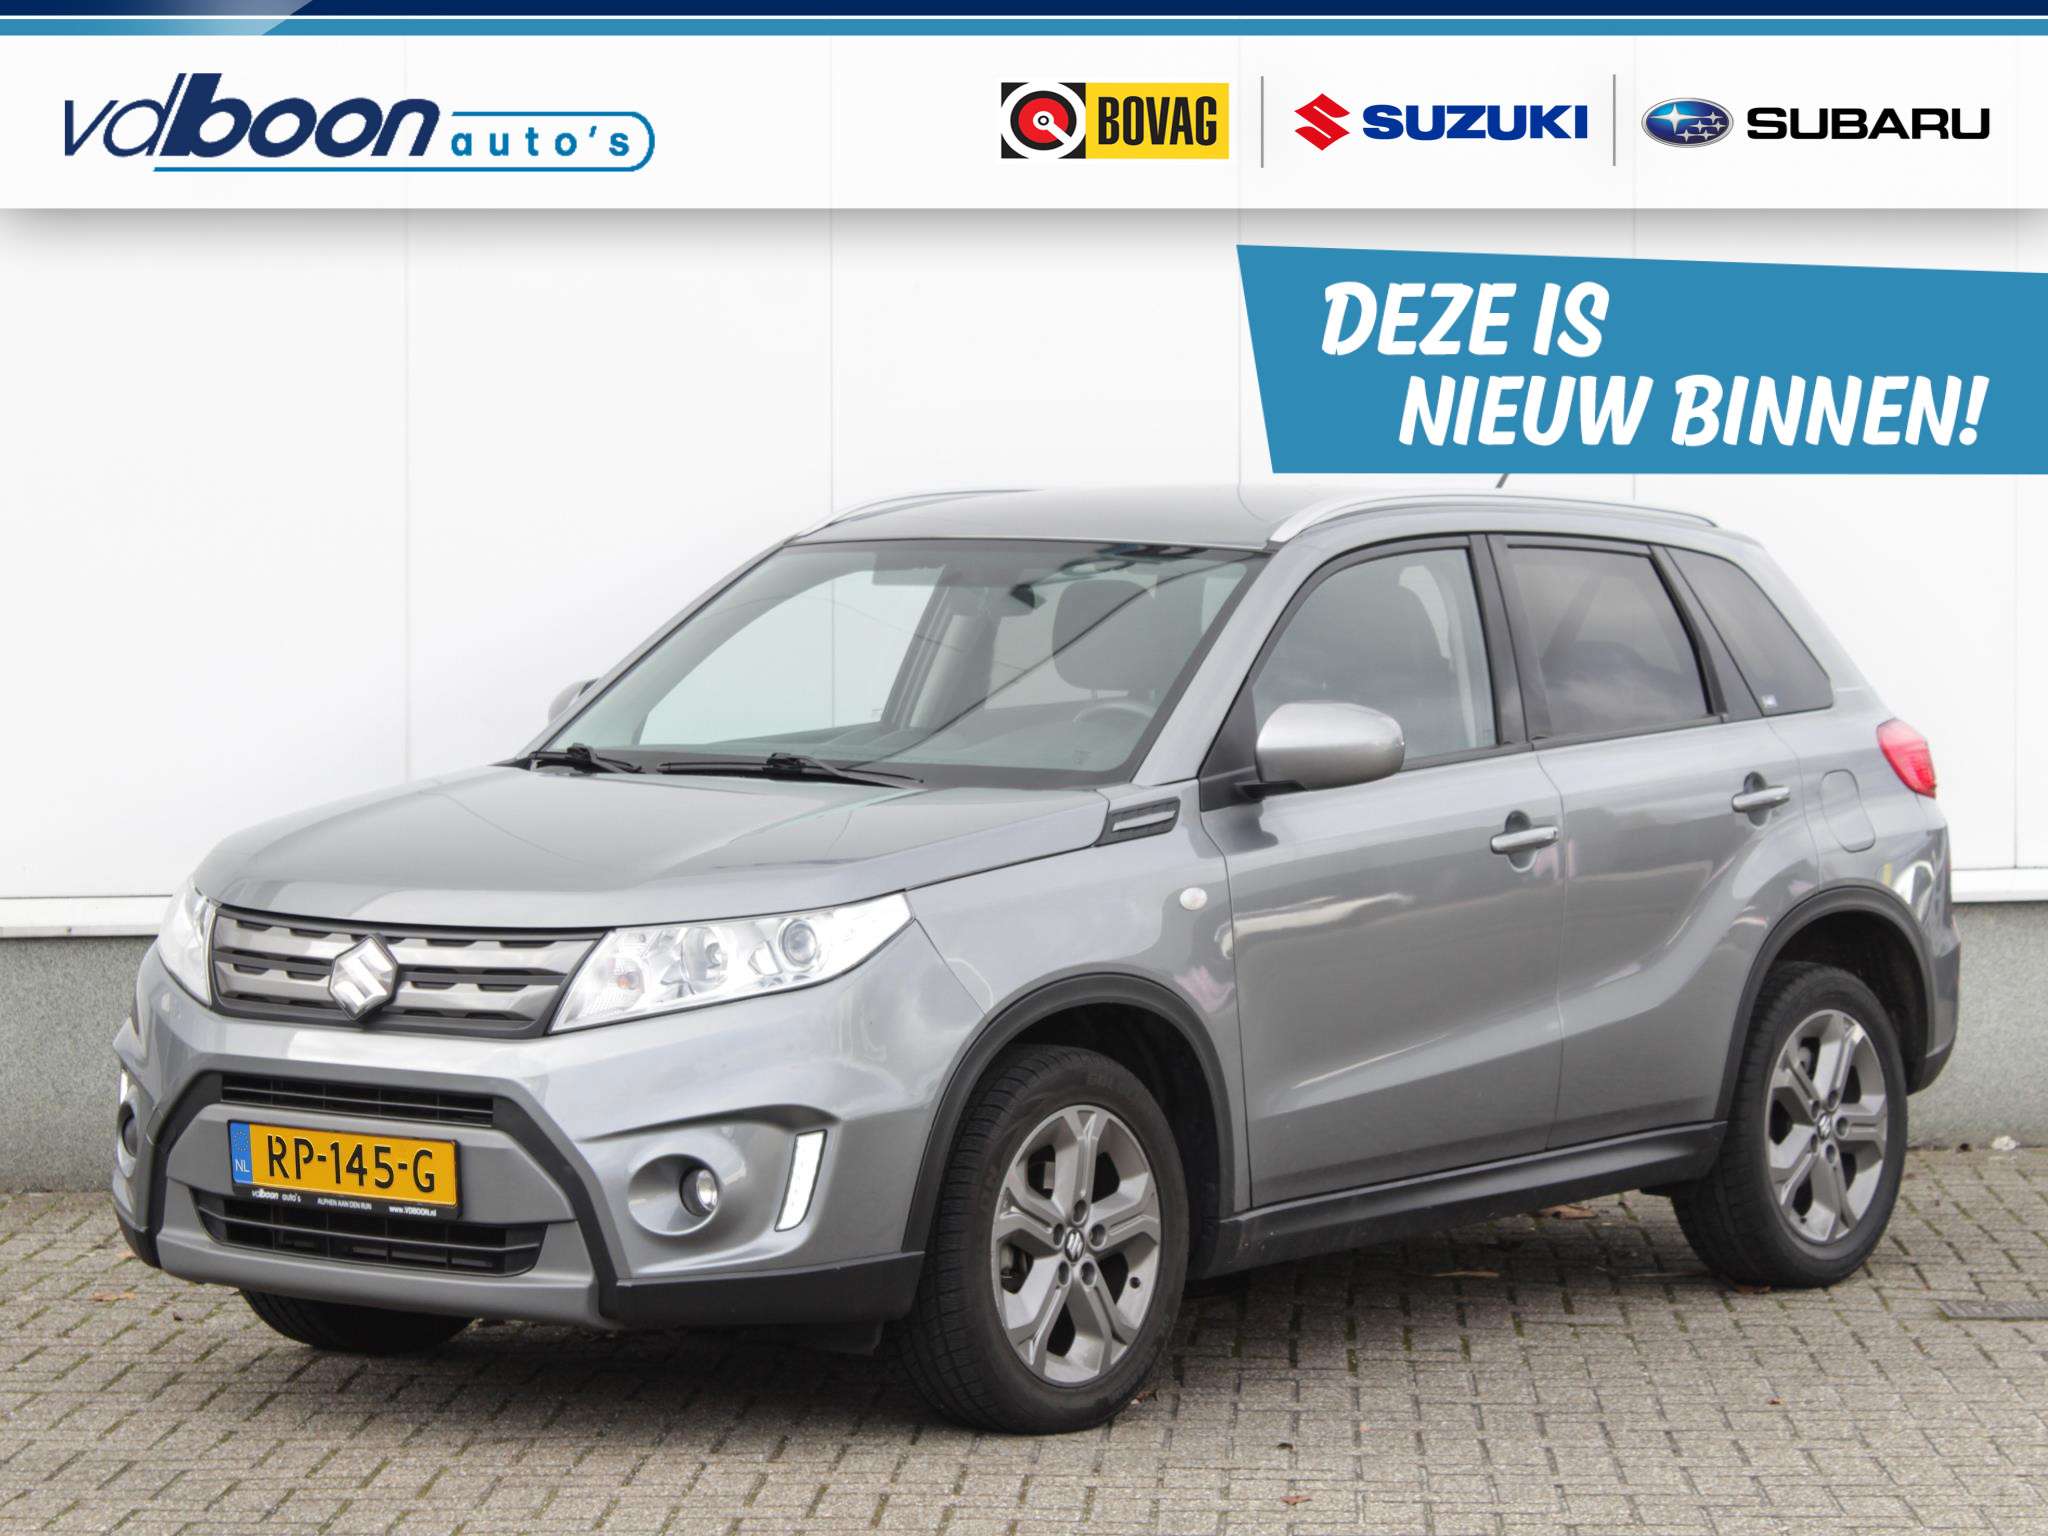 Suzuki Vitara Off-Road/Pick-up in Grey used in ALPHEN A/D RIJN for € 17,945.-